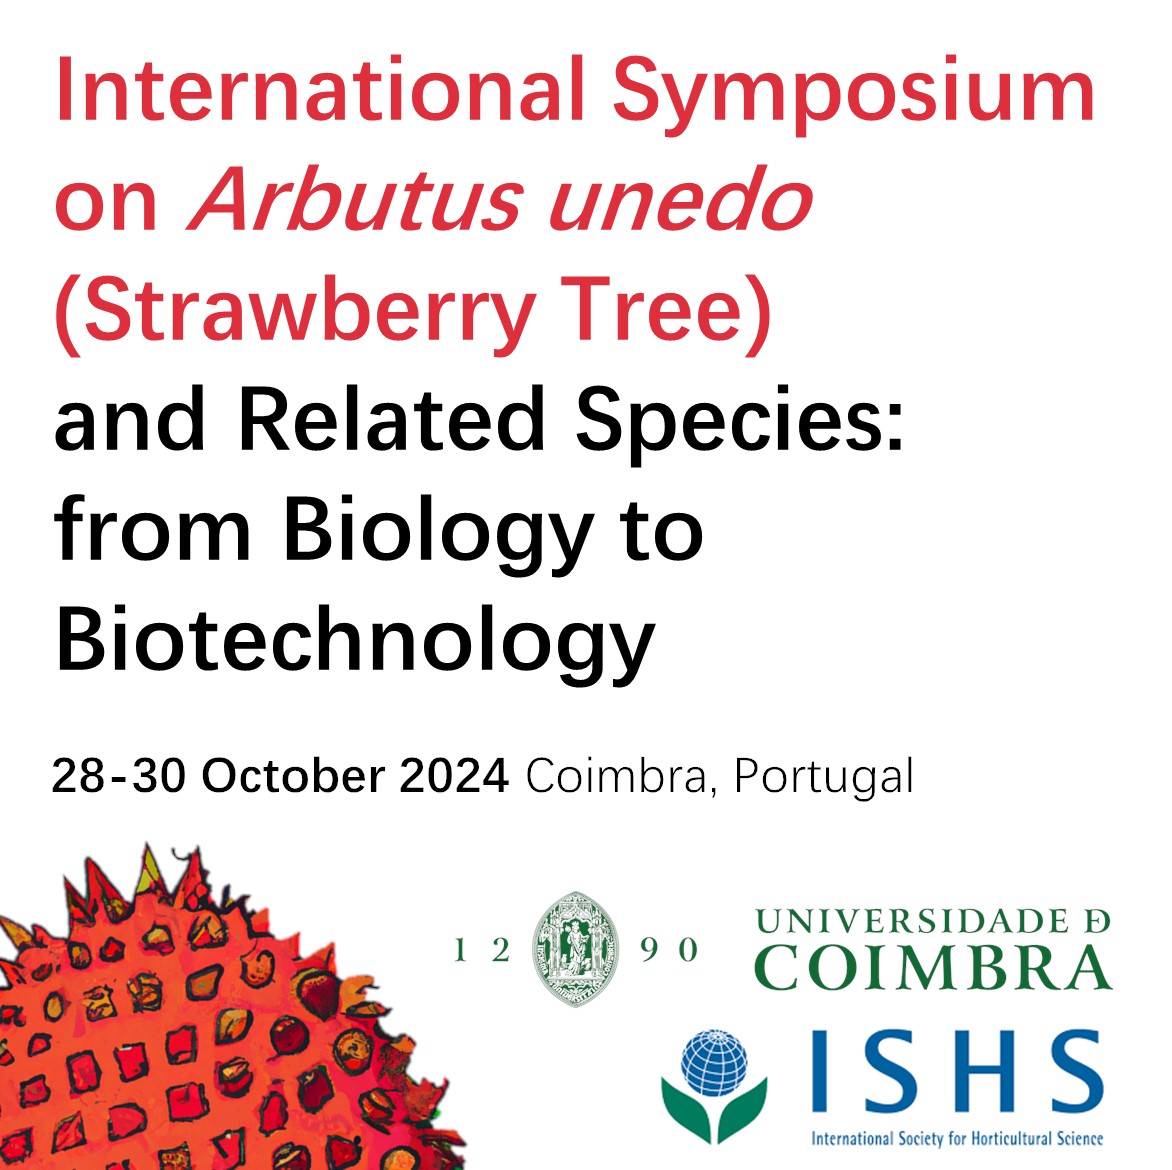 International Symposium on Arbutus unedo - Conference Dinner